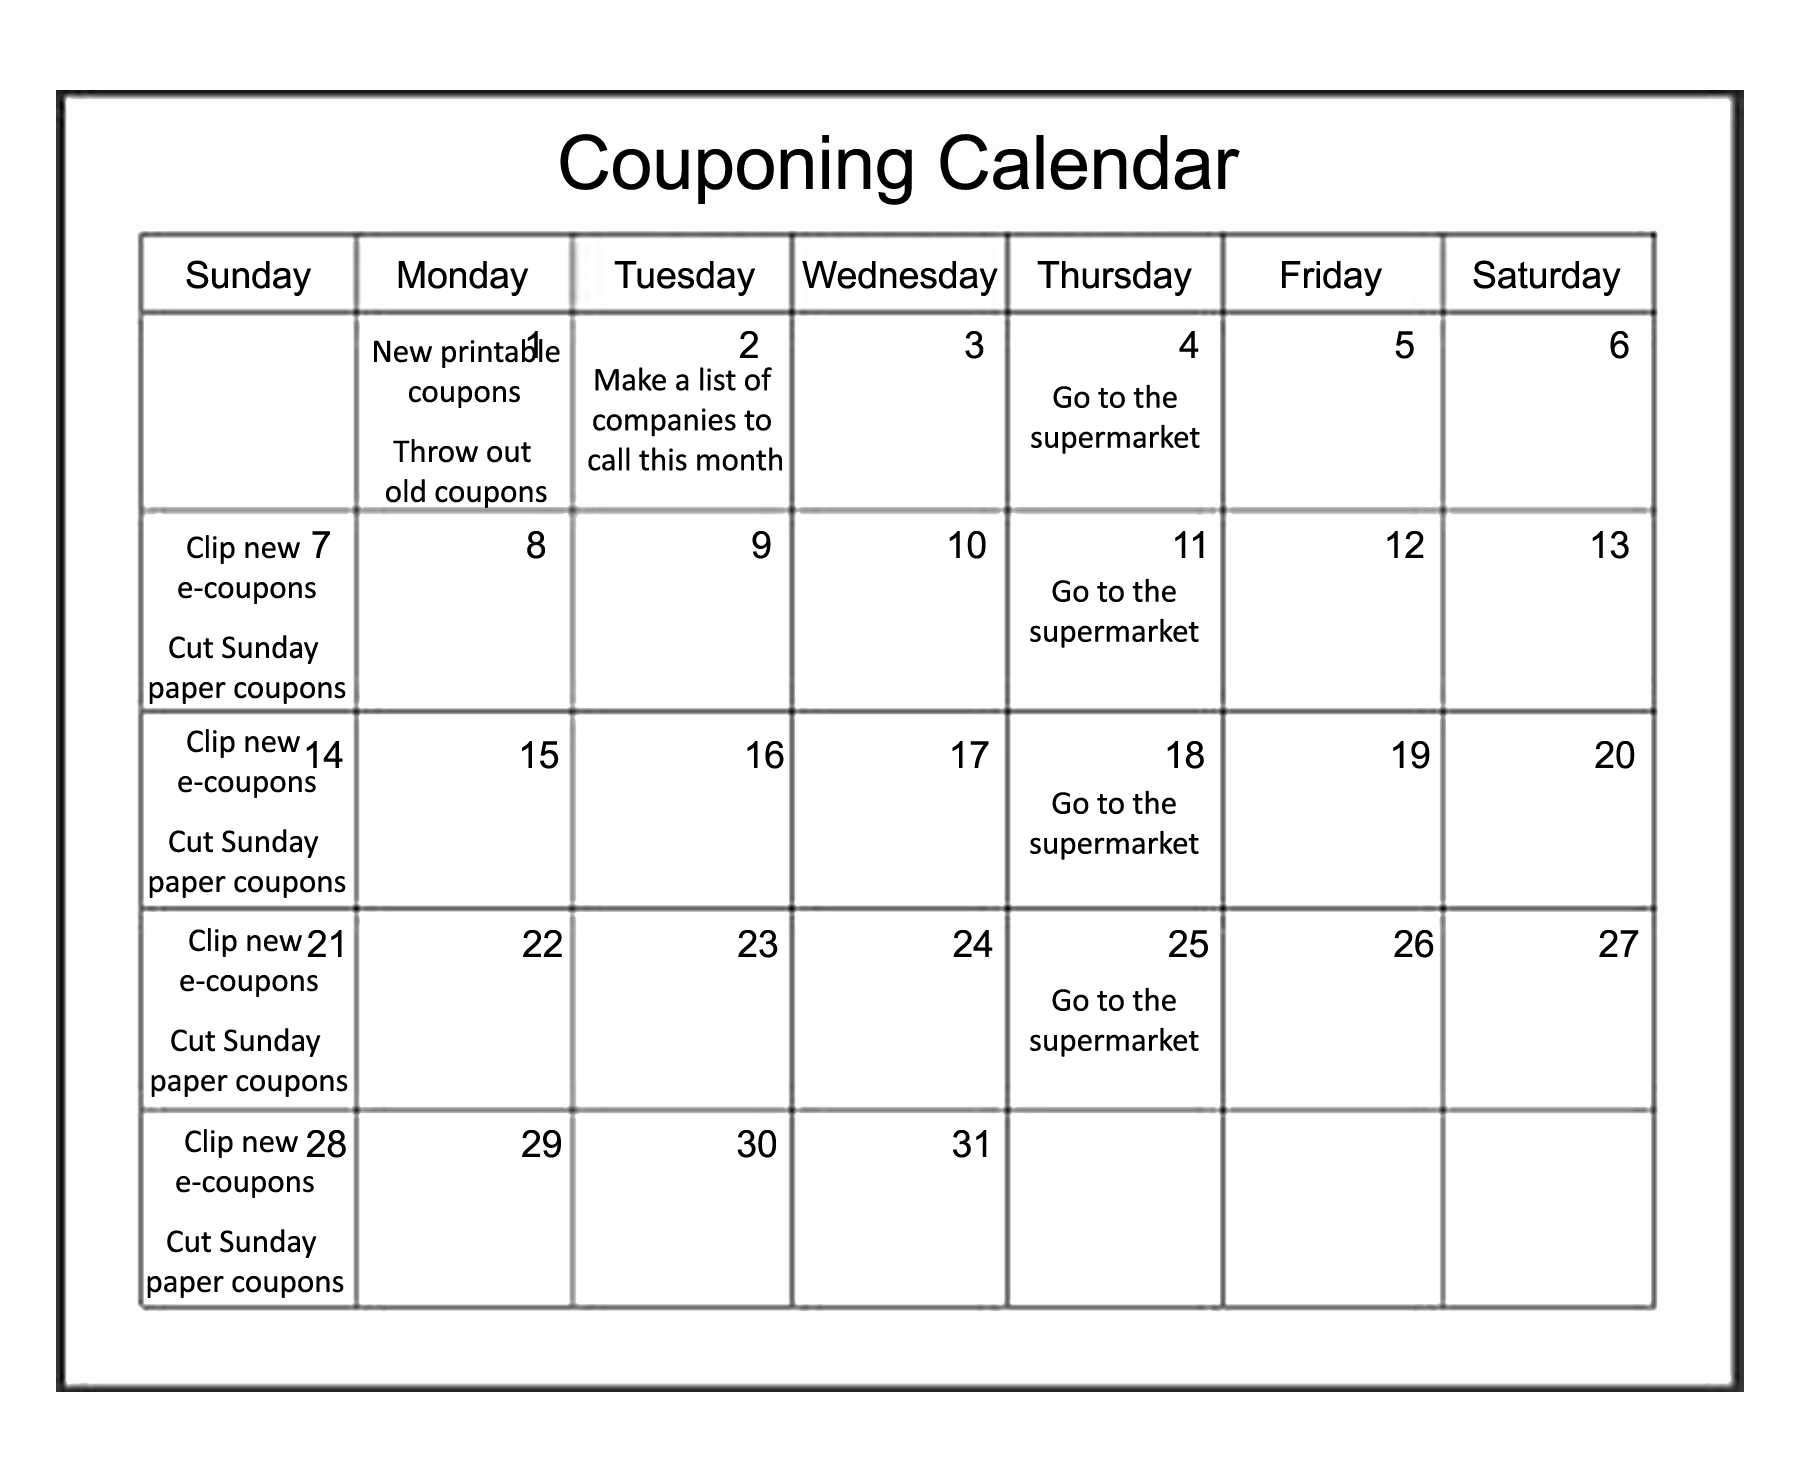 Couponing Calendar The Kosher Coupon Lady